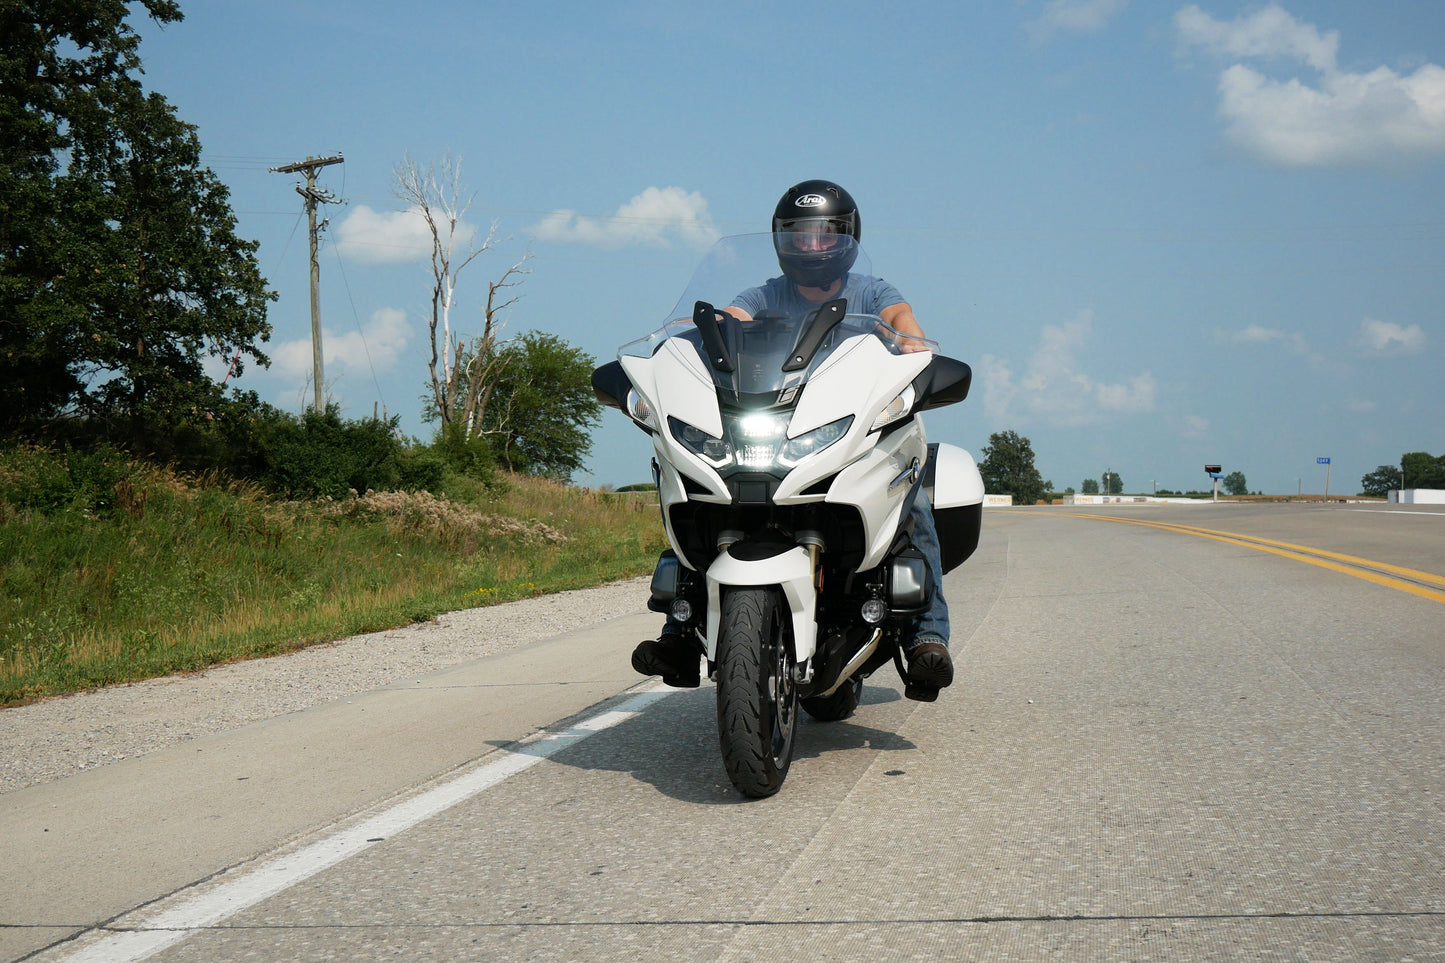 Sleek and comfortable BMW motorcycle highway pegs. BMW R1250 R highway peg foot rest.